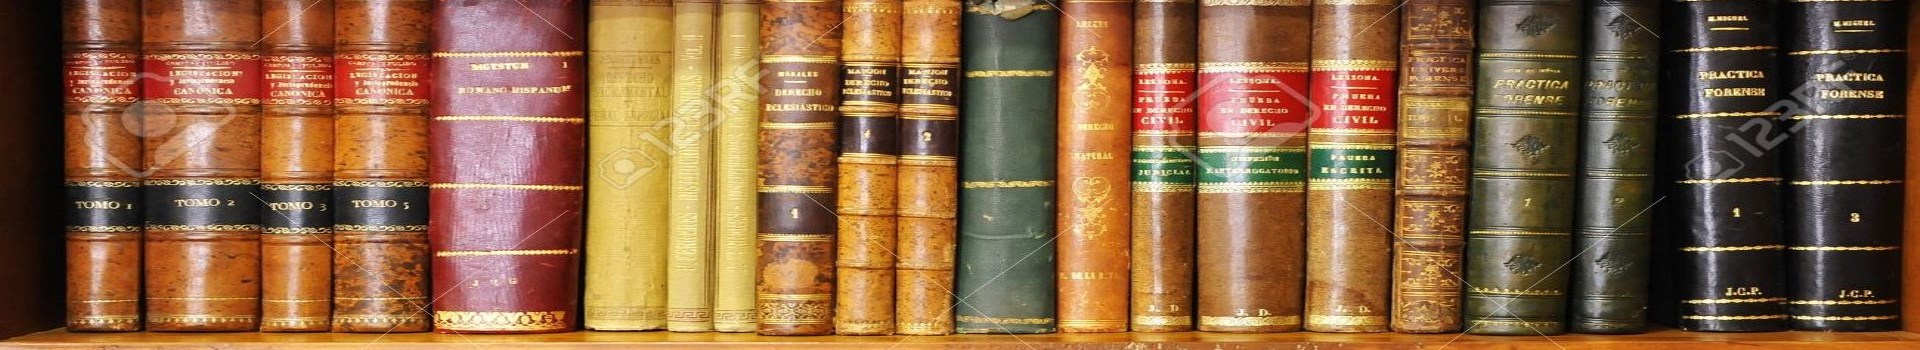 bookshelf of old books